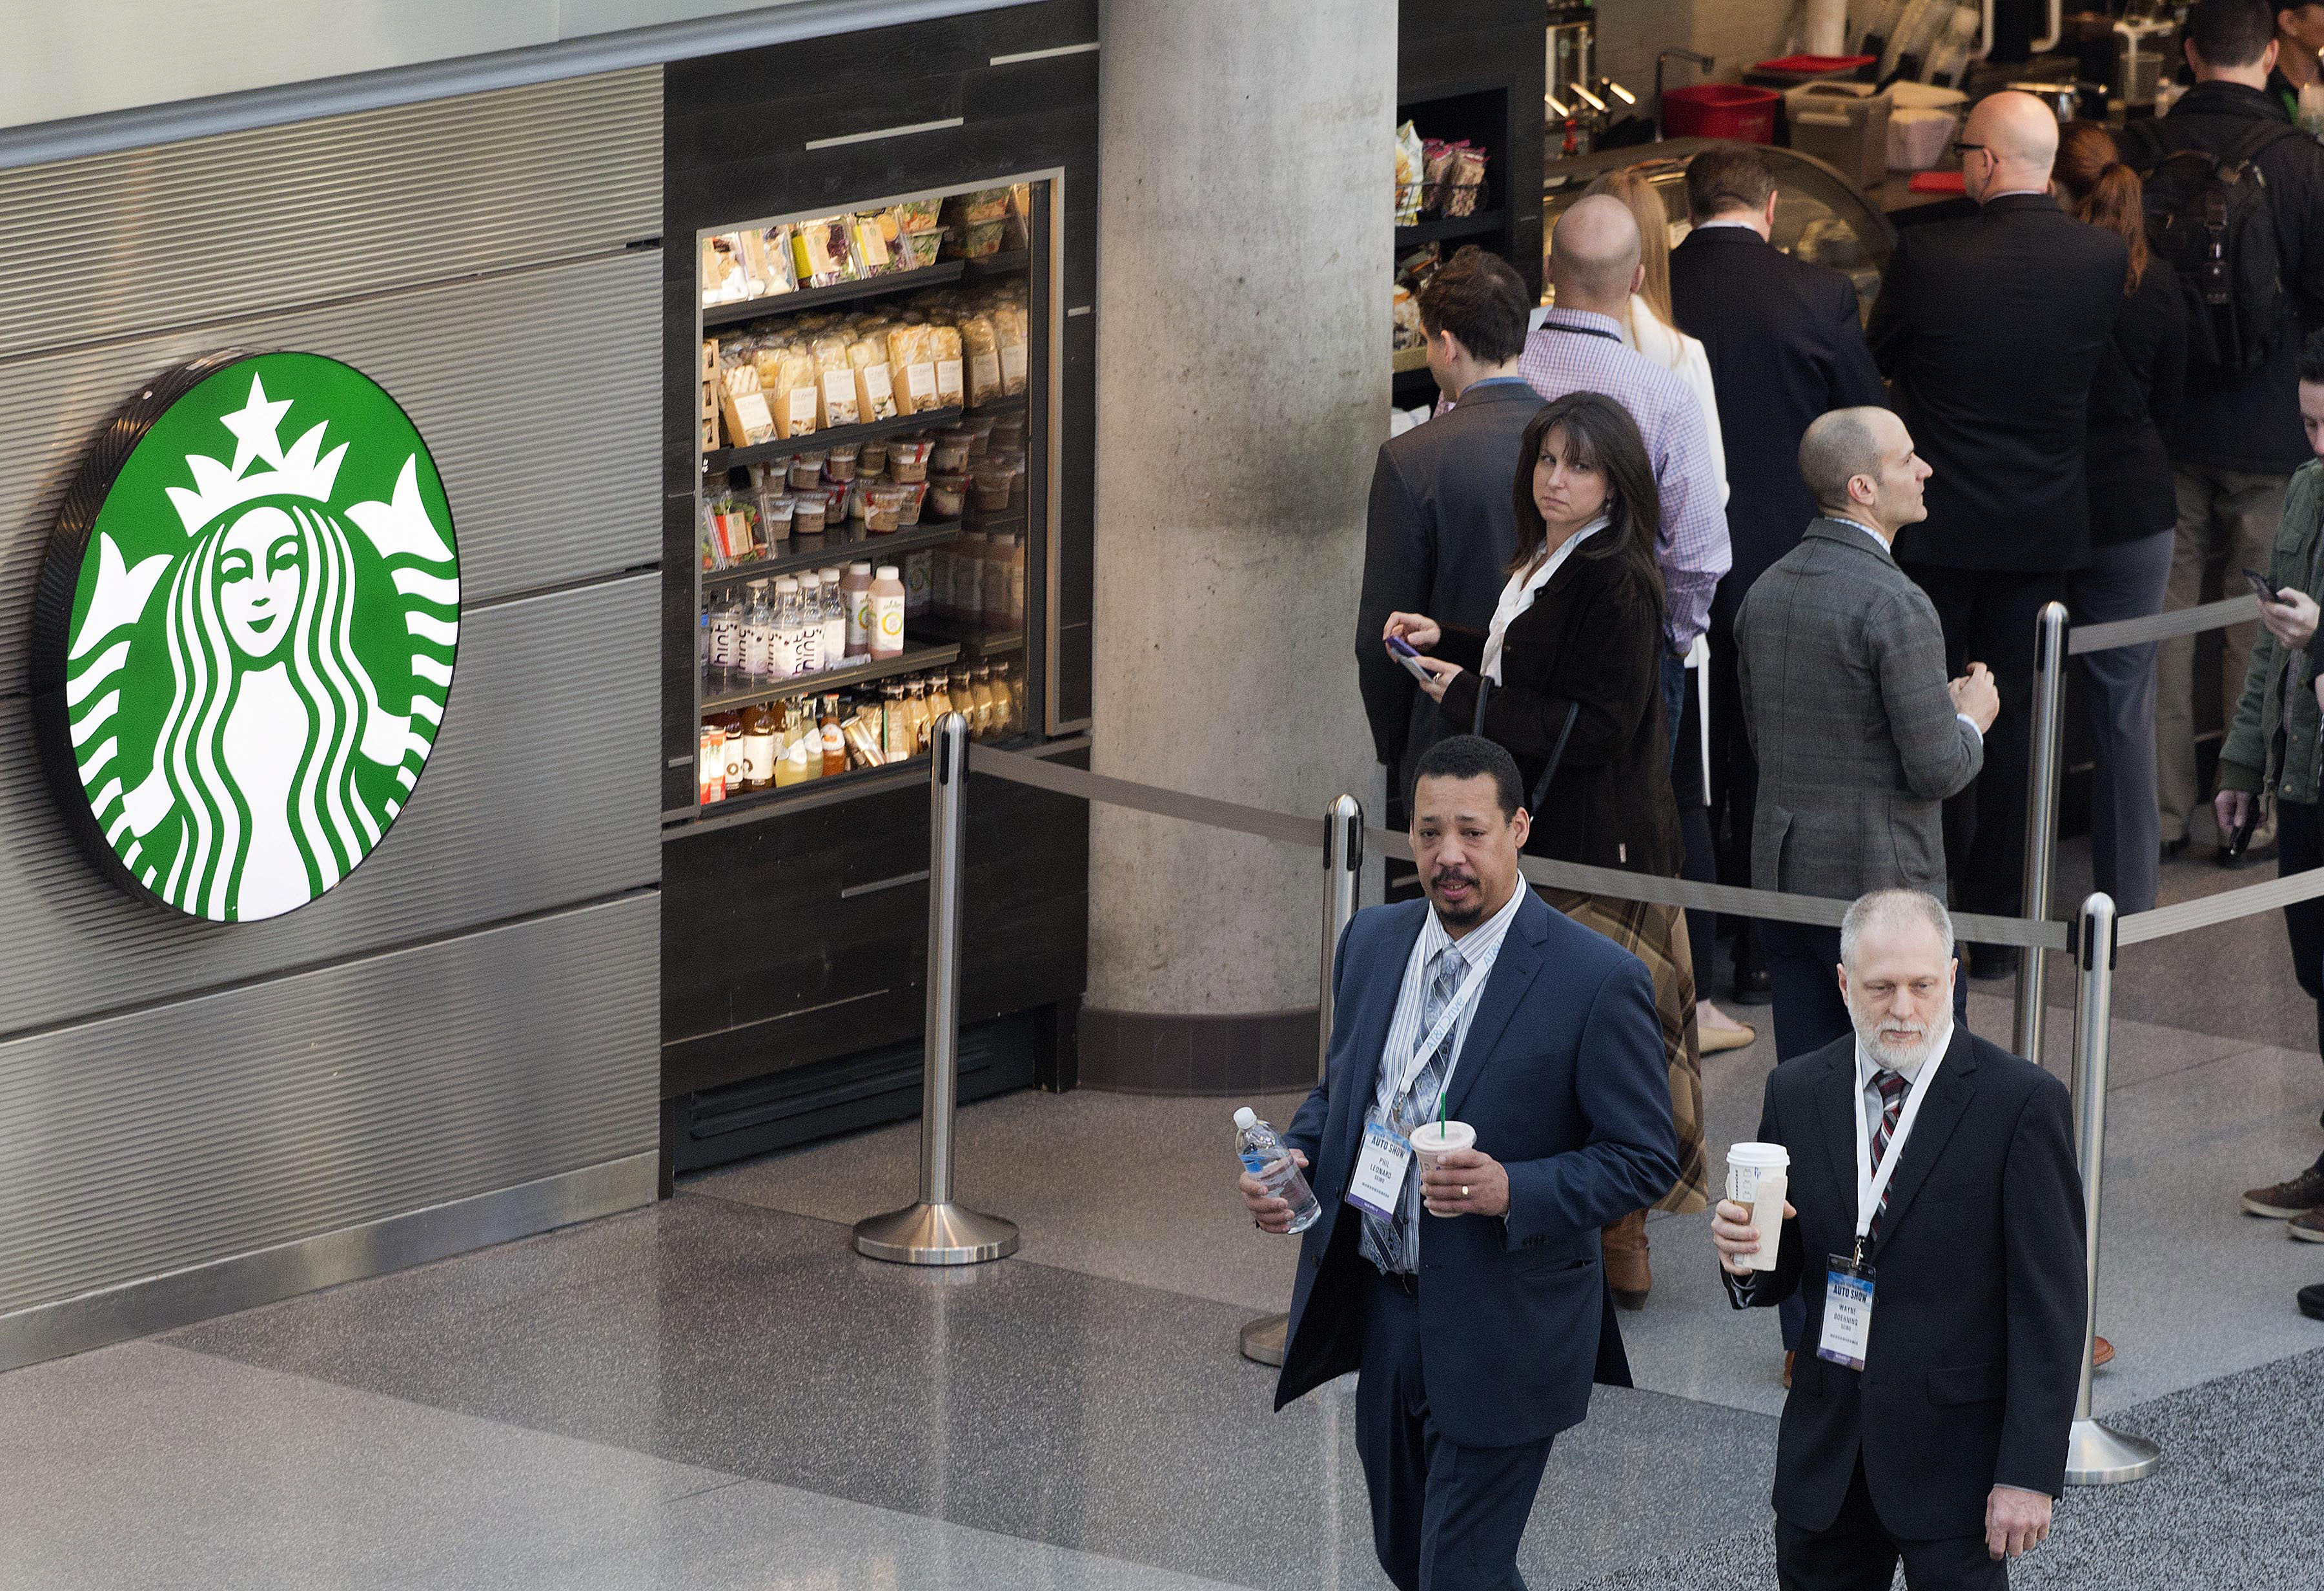 Customers line up at a Starbucks, April 2, 2015 in New York. (Mark Lennihan—AP)